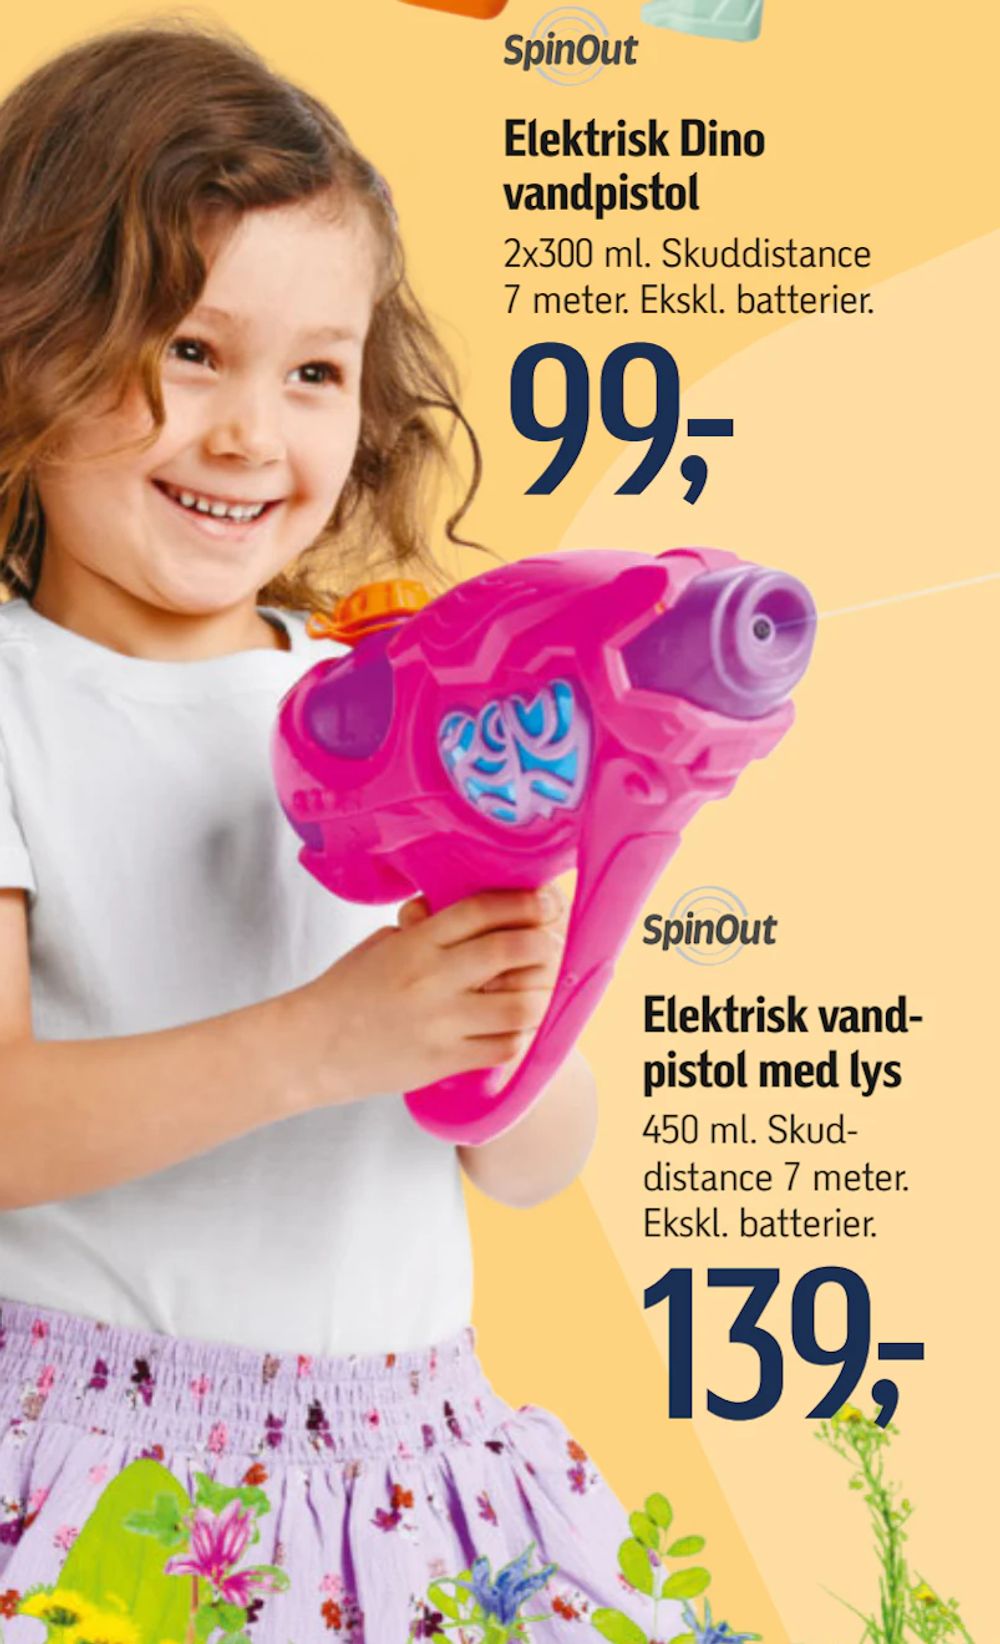 Tilbud på Elektrisk vandpistol med lys fra føtex til 139 kr.